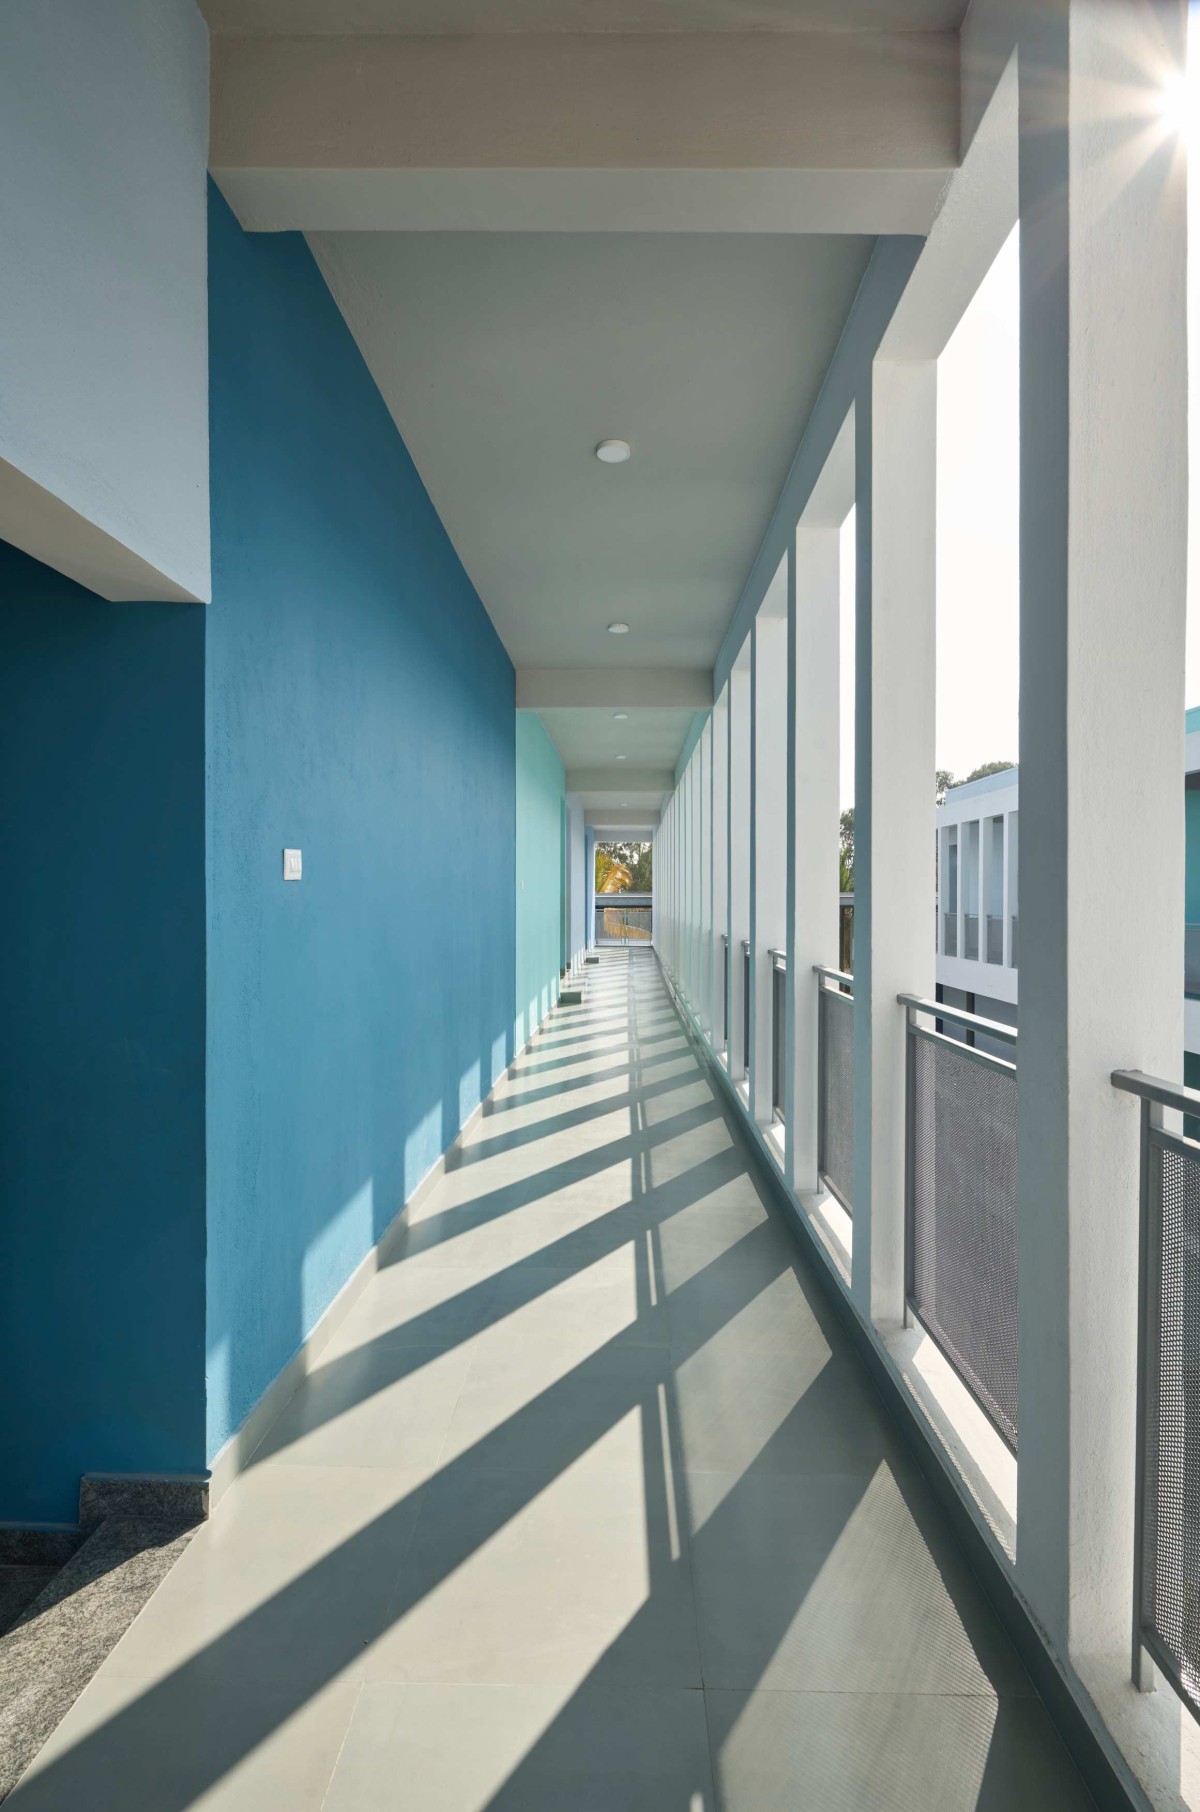 Second Floor Corridor of Vidyakula International School by Sudaiva Studio